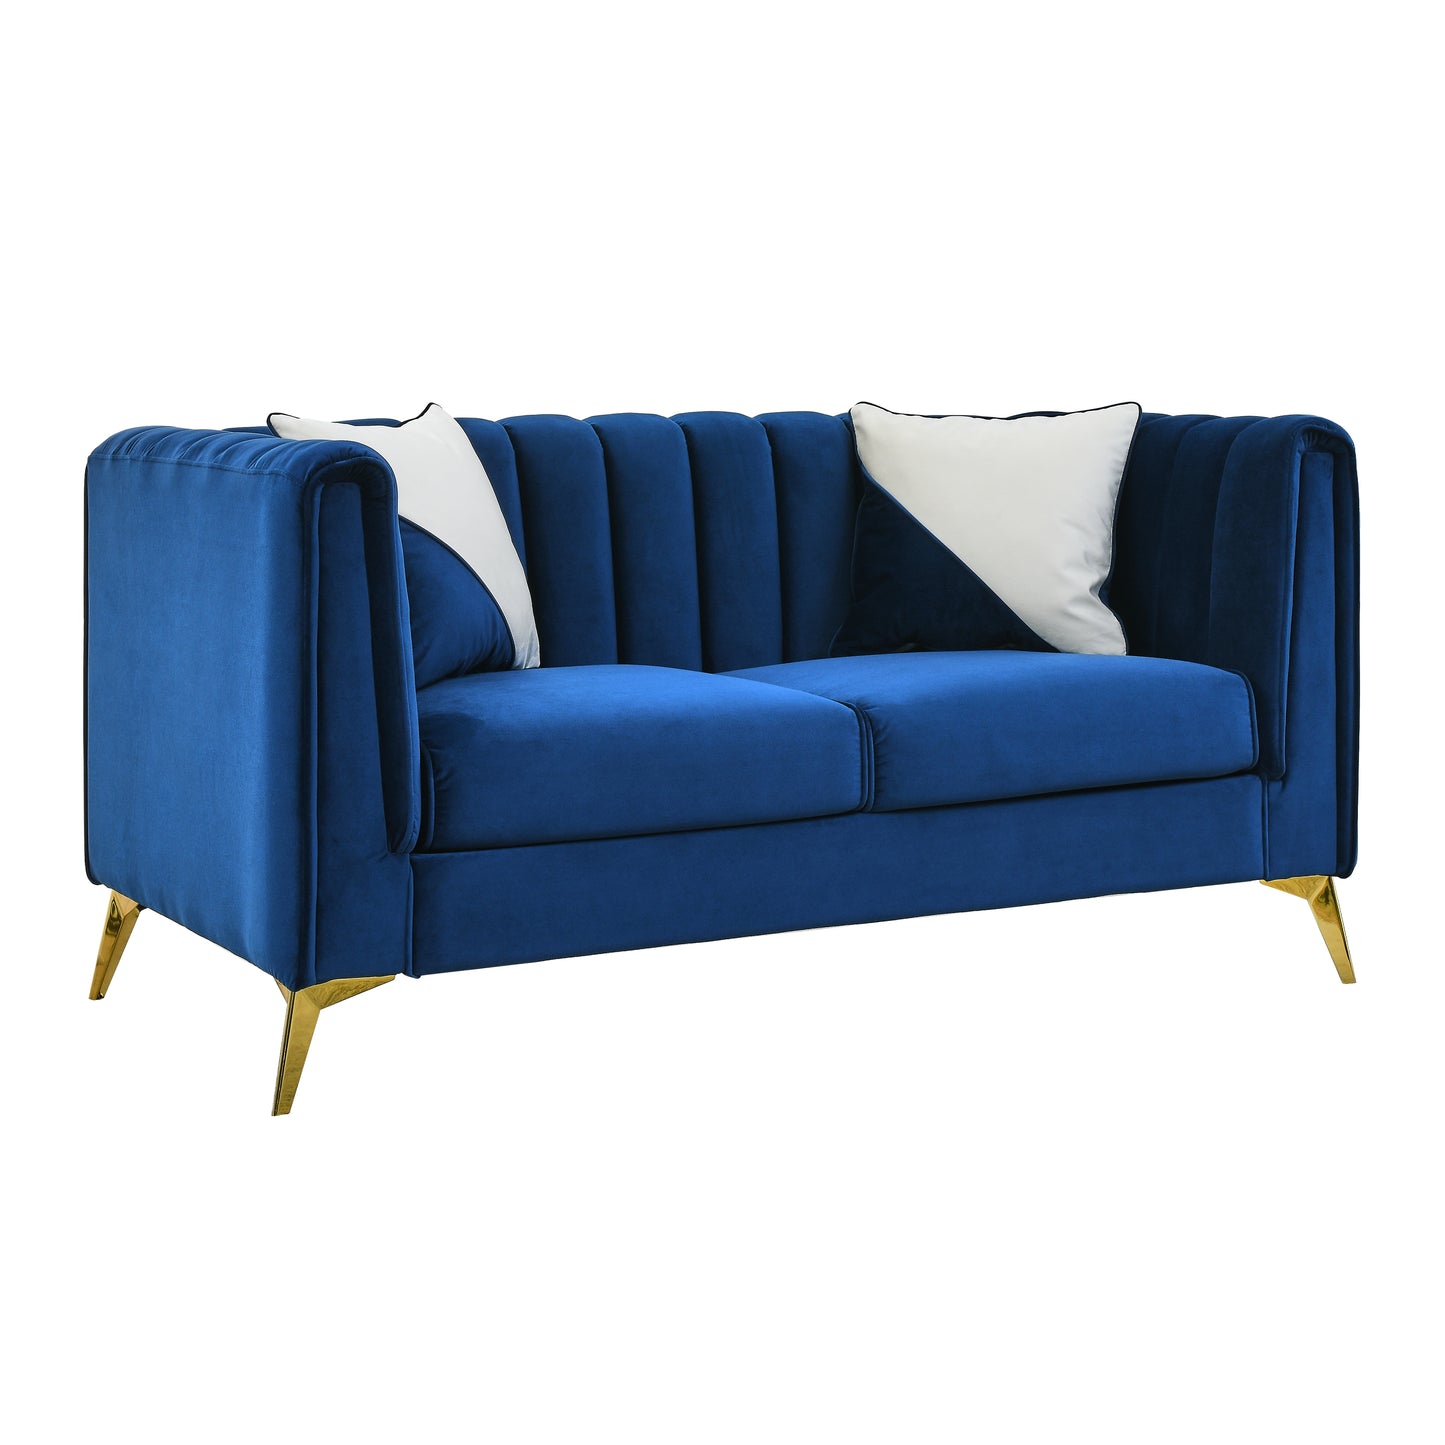 Marmara Contemporary Velvet Sofa Navy Blue